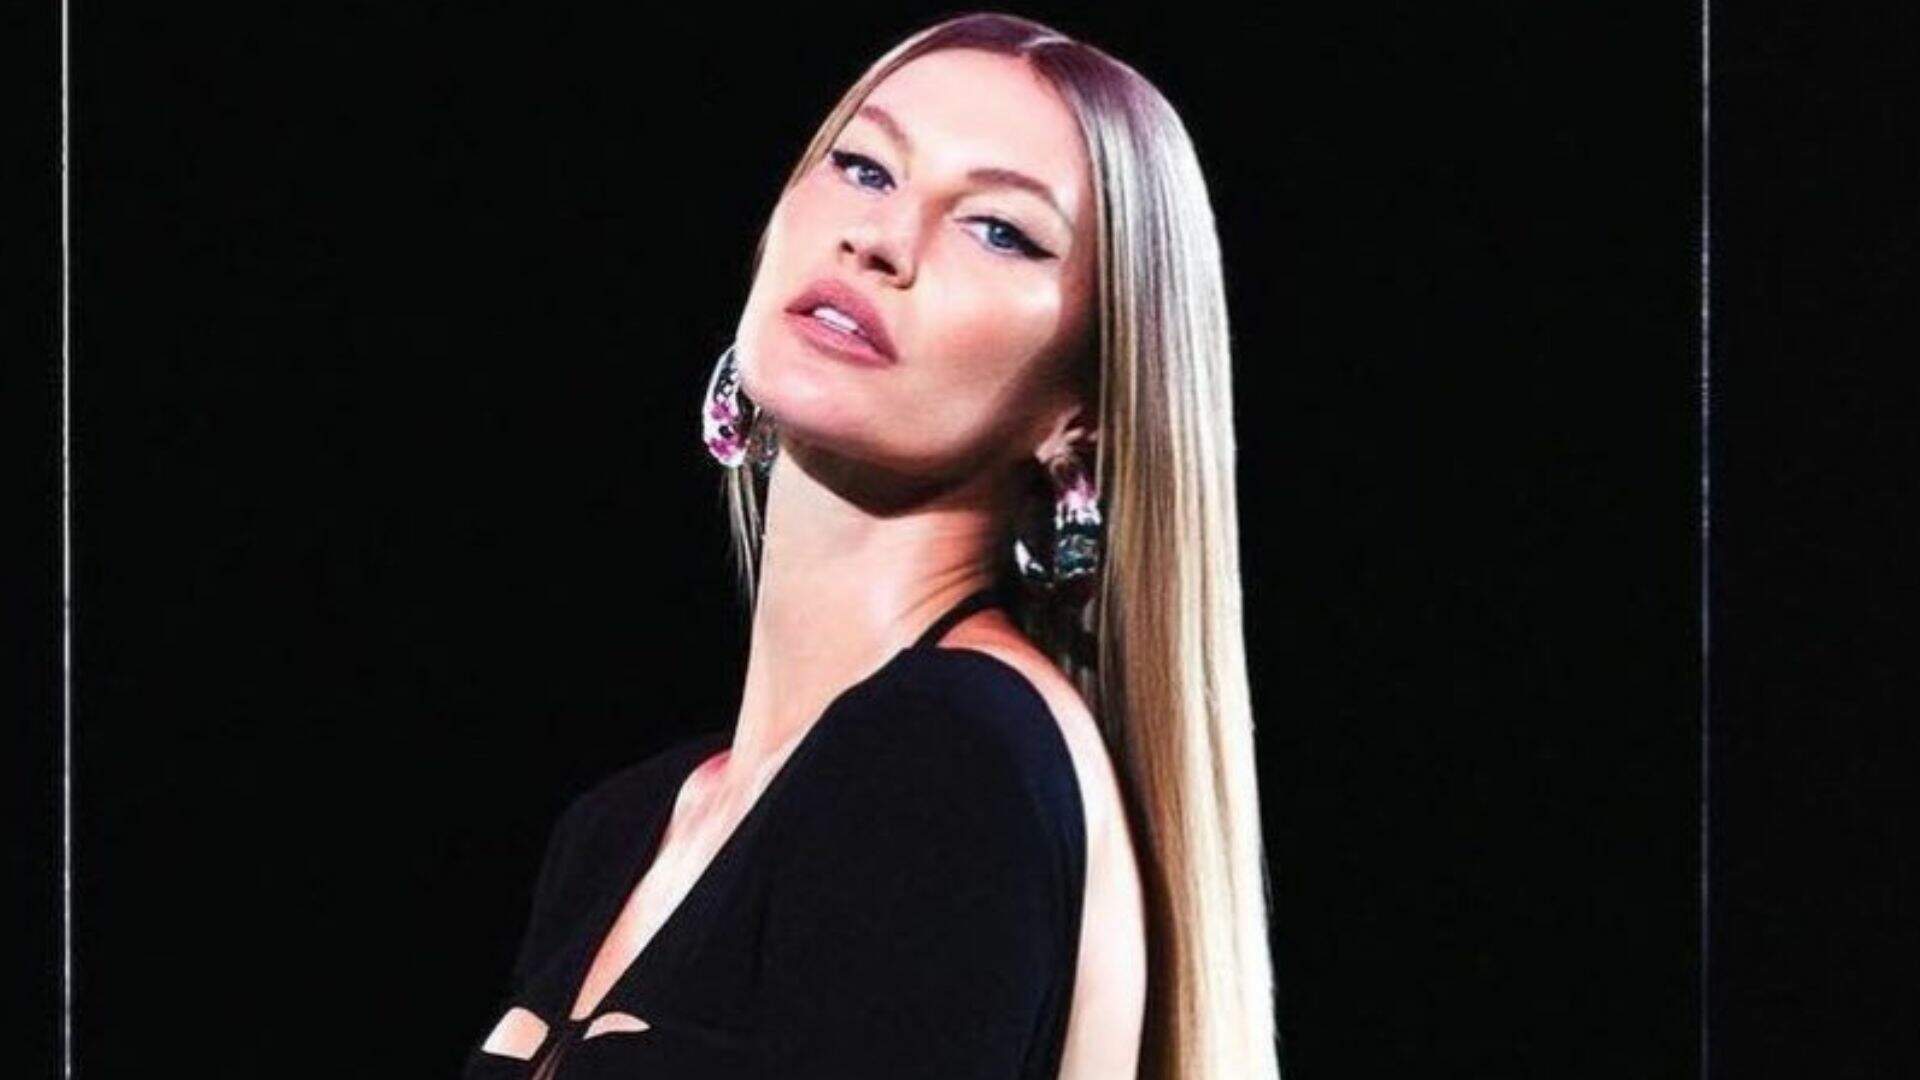 Gisele Bündchen surge ousada e sensual ao estrelar nova campanha da Arezzo - Metropolitana FM